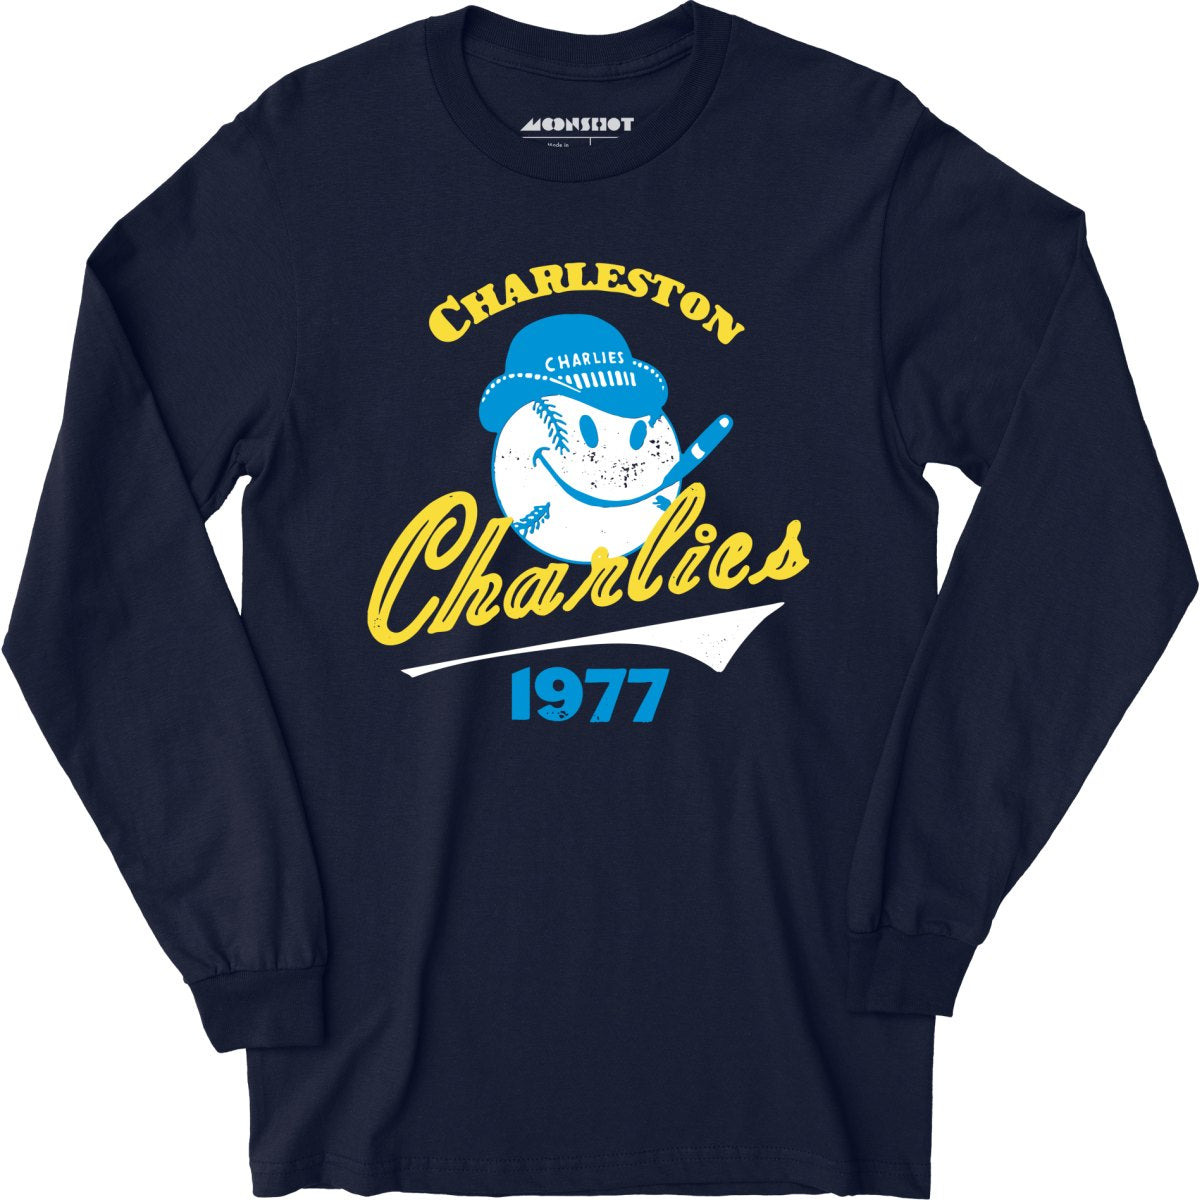 Charleston Charlies - West Virginia - Vintage Defunct Baseball Teams - Long Sleeve T-Shirt